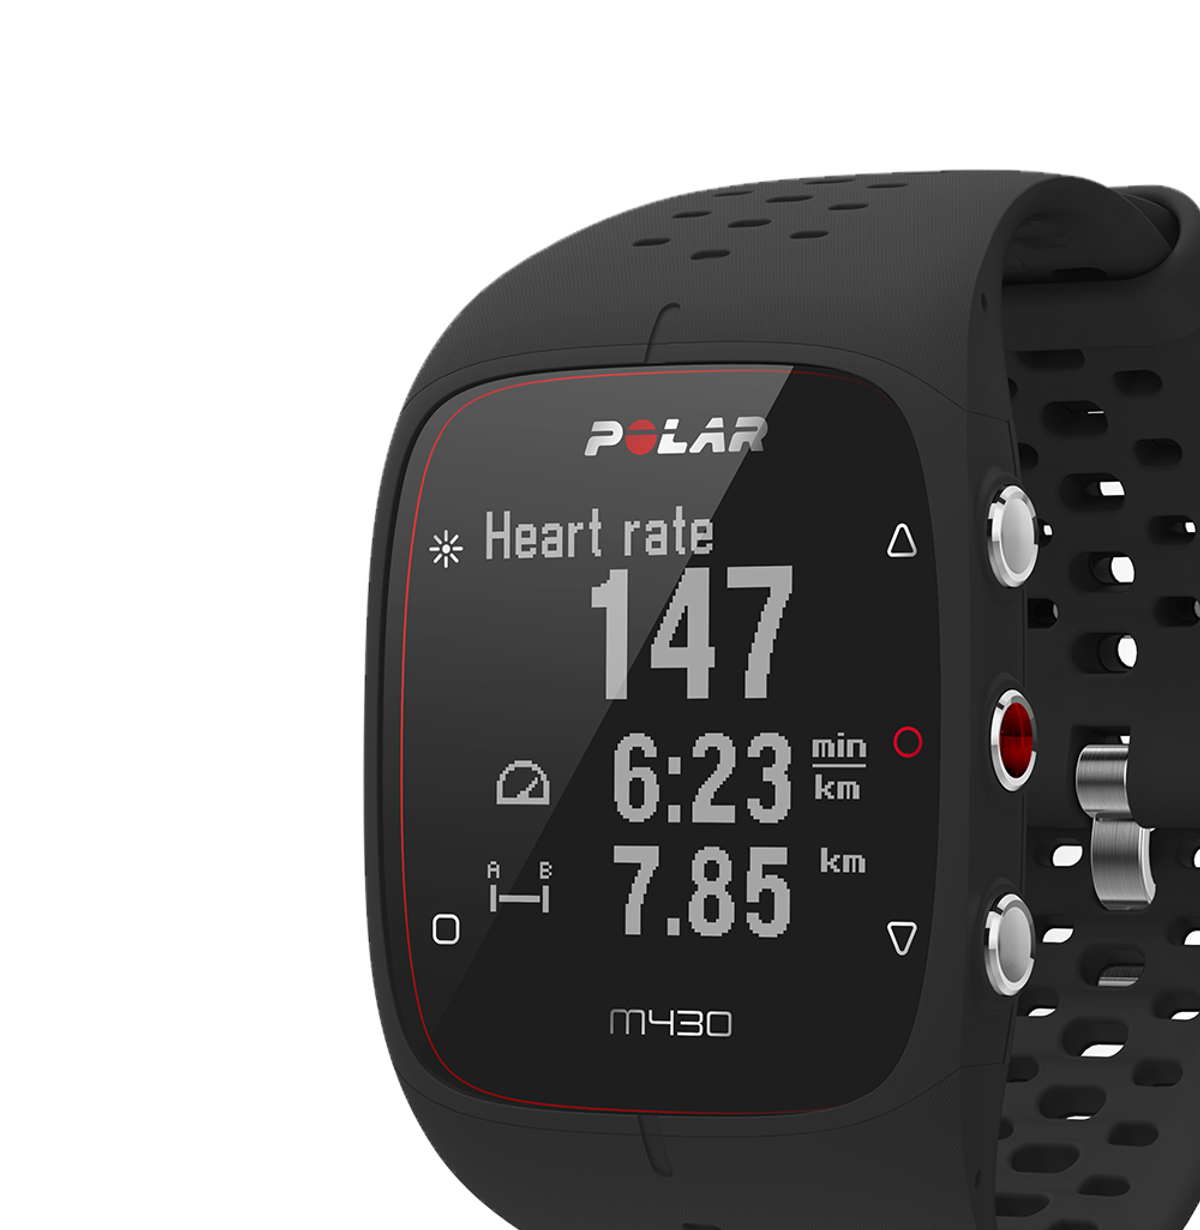 Oferta! Polar M400 HR - Reloj con GPS integrado y registro de